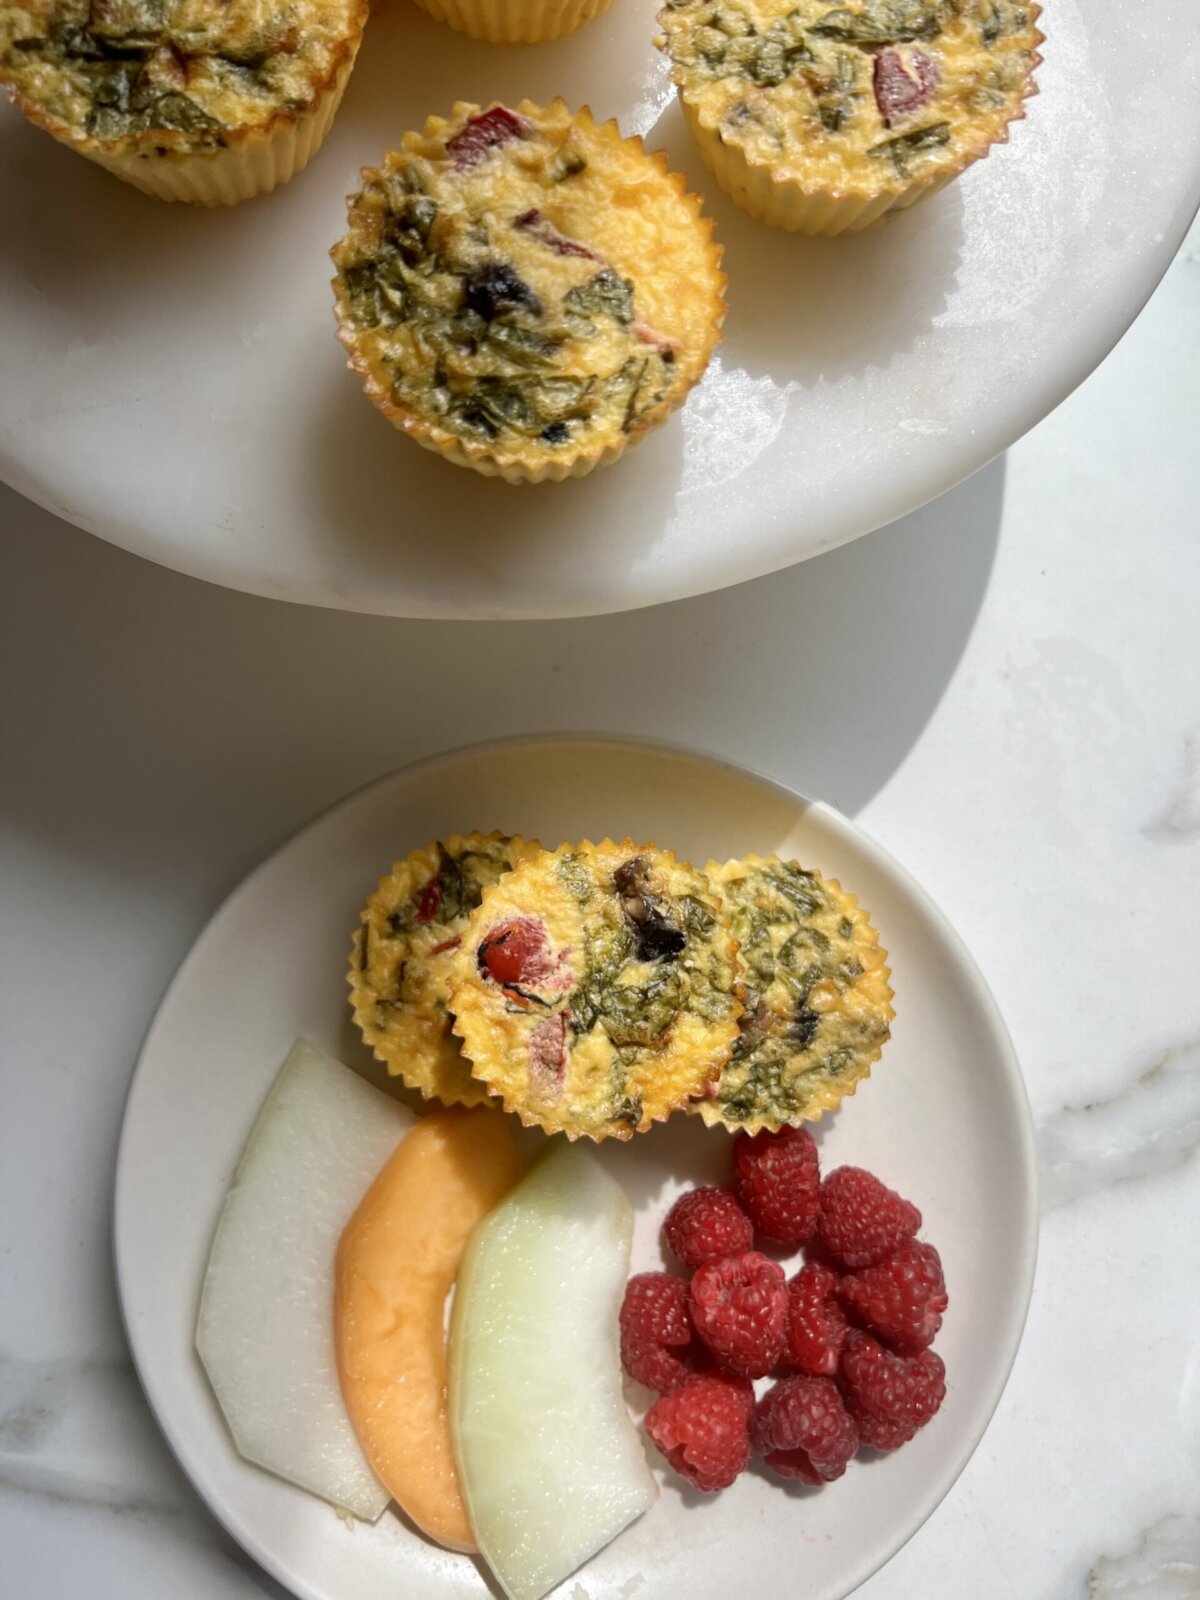 starbucks copycat egg bites served on a plate with fresh fruit